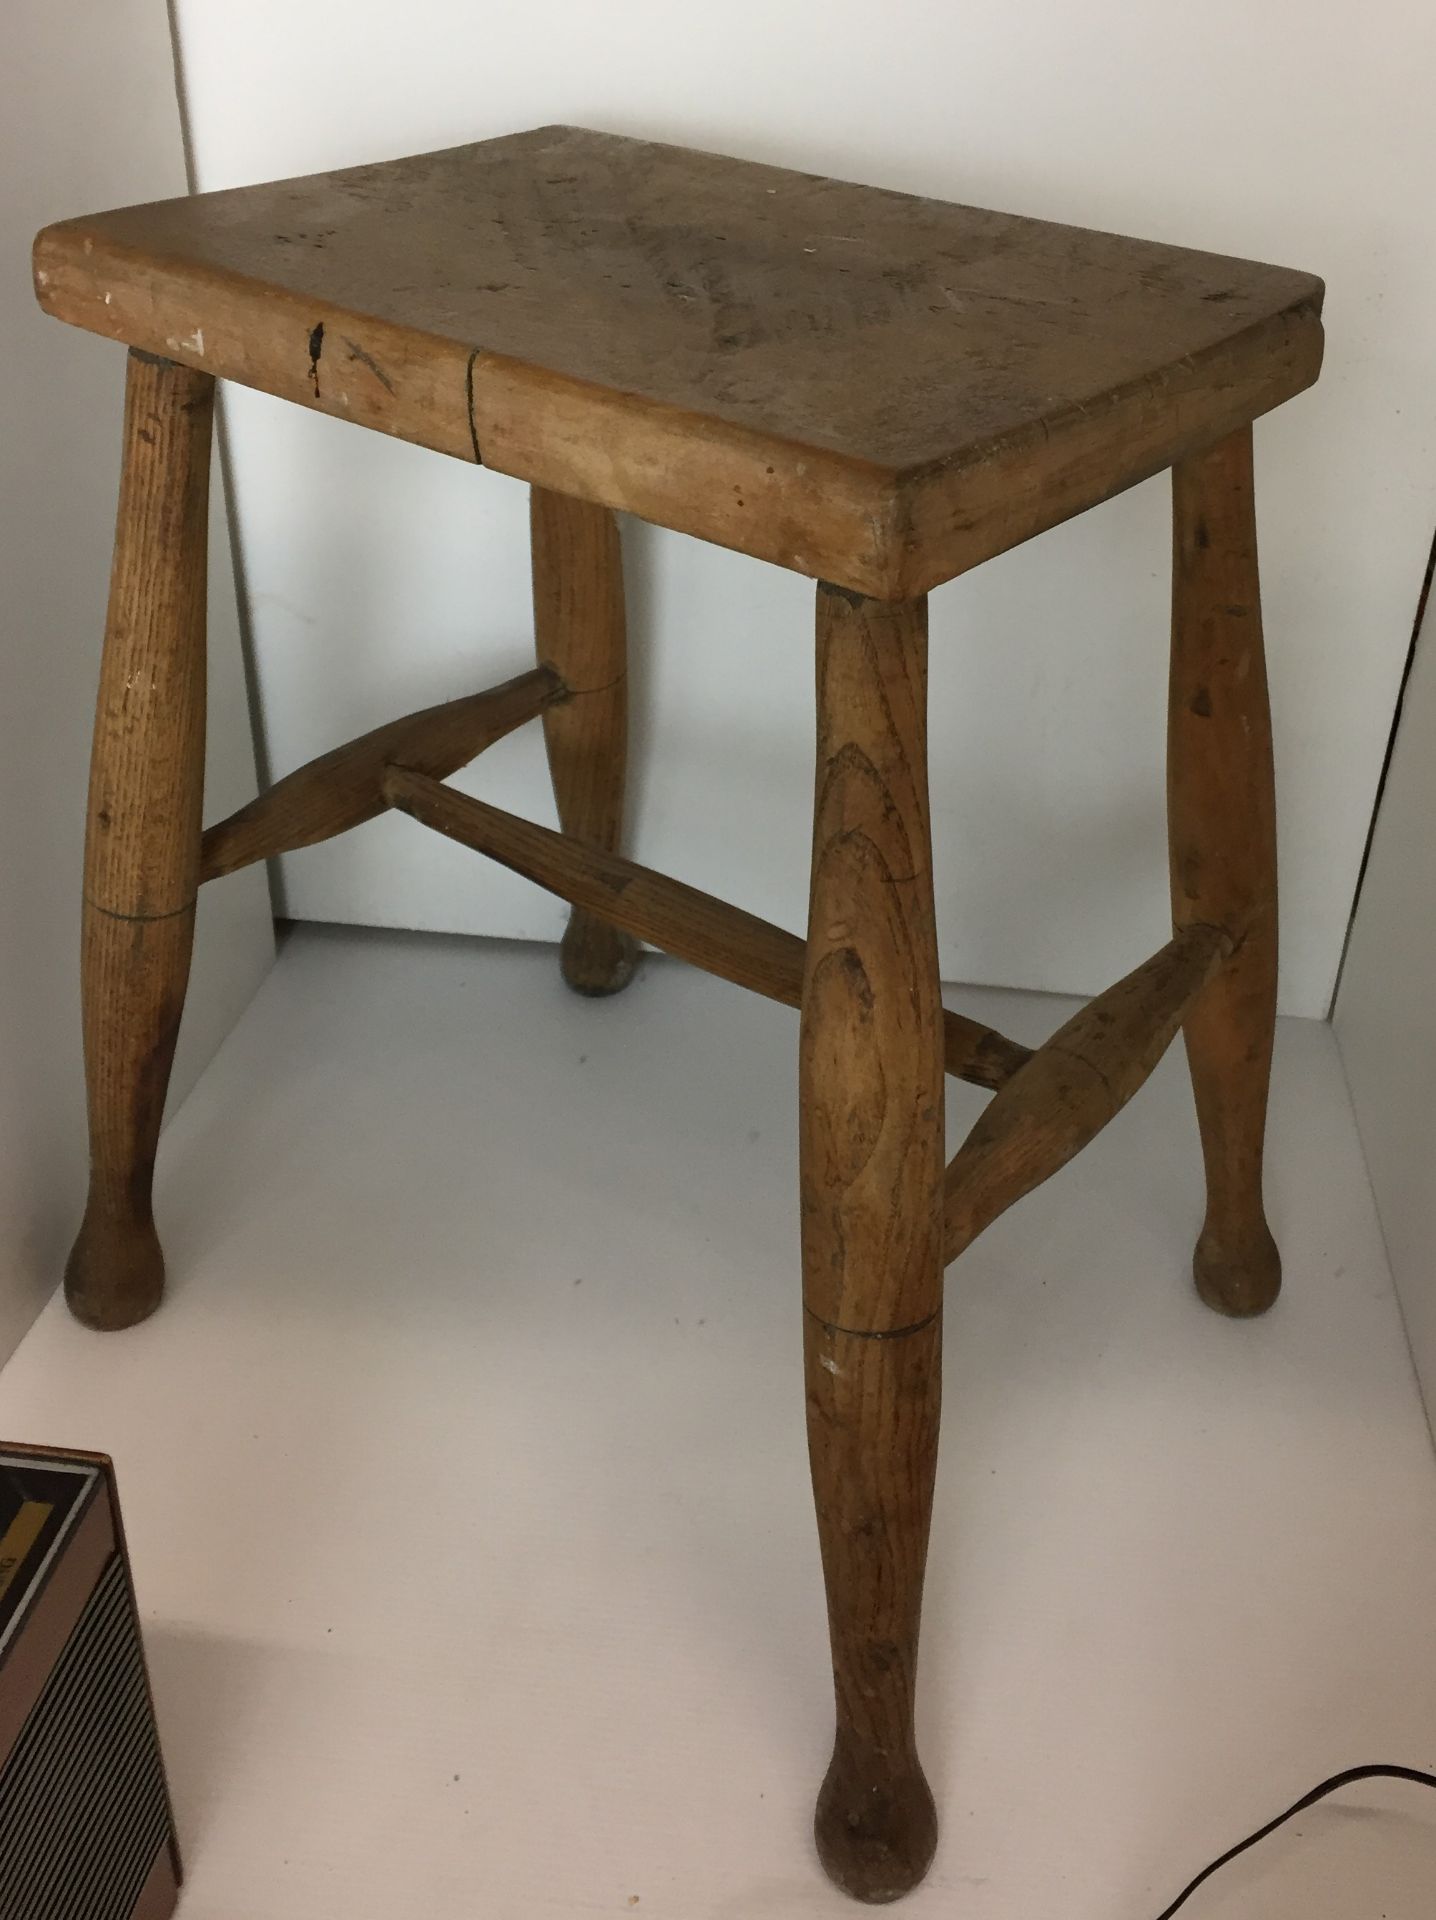 Four items wooden stool 30 x 22 x 40cm high, Majority GIR-DAB-OAK-2 DAB radio, - Image 2 of 5